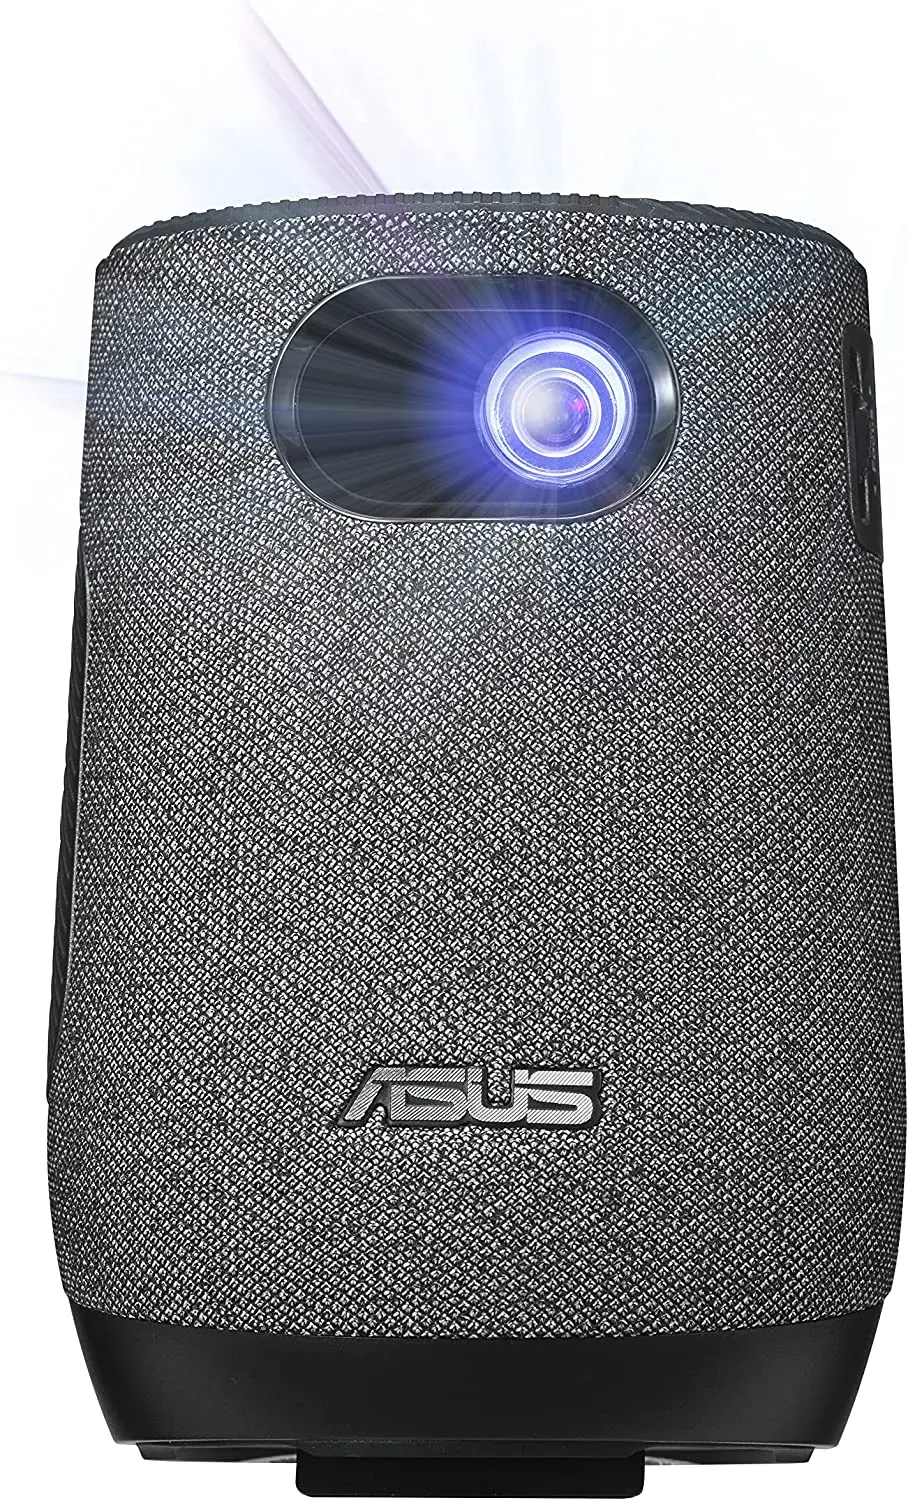 Asus ZenBeam Latte L1 Proyector LED Portatil Bluetooth WiFi - Audio Harman Kardon - HDMI, USB - 300 